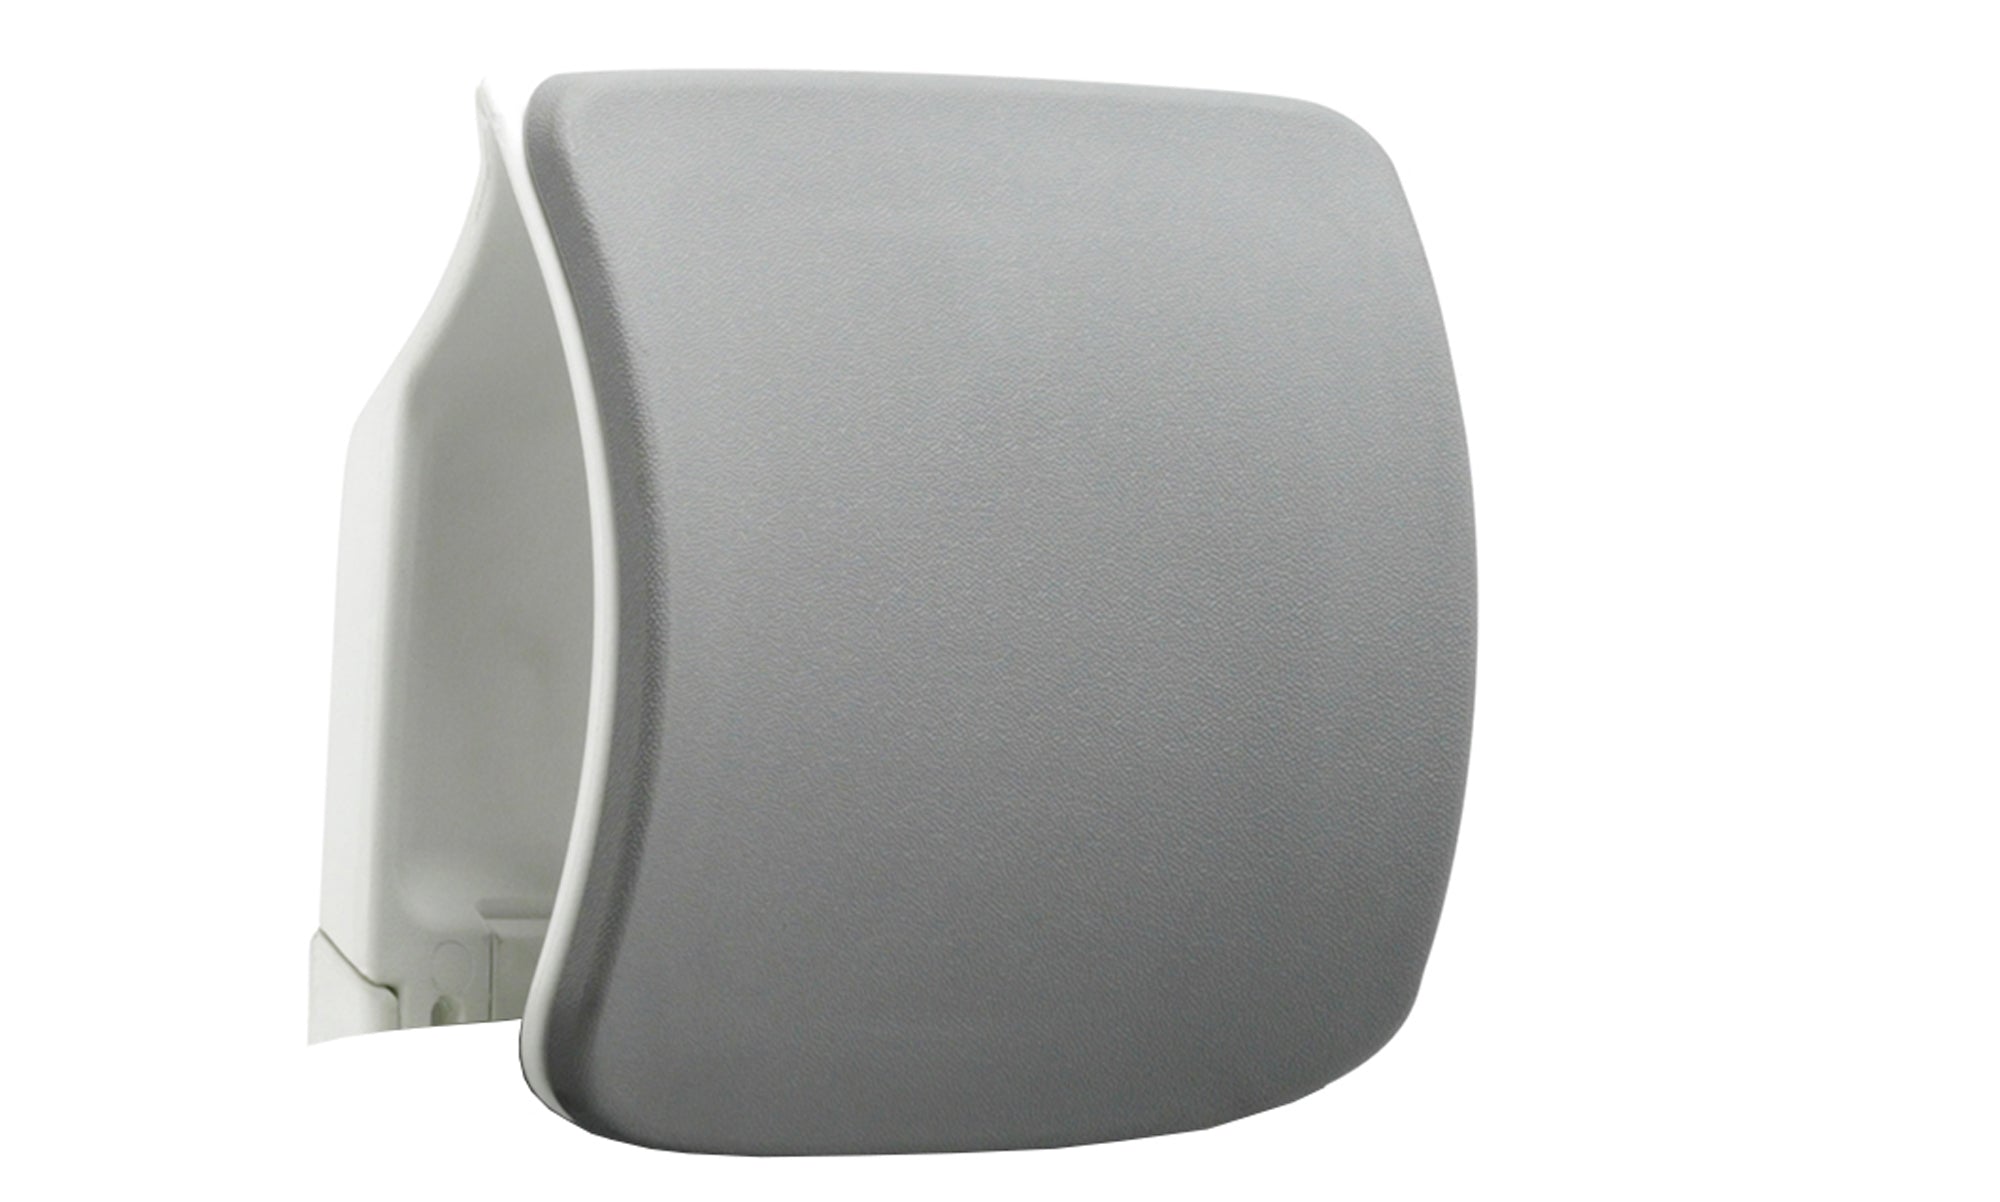 Zure White Shell Black Fabric Headrest Image 2